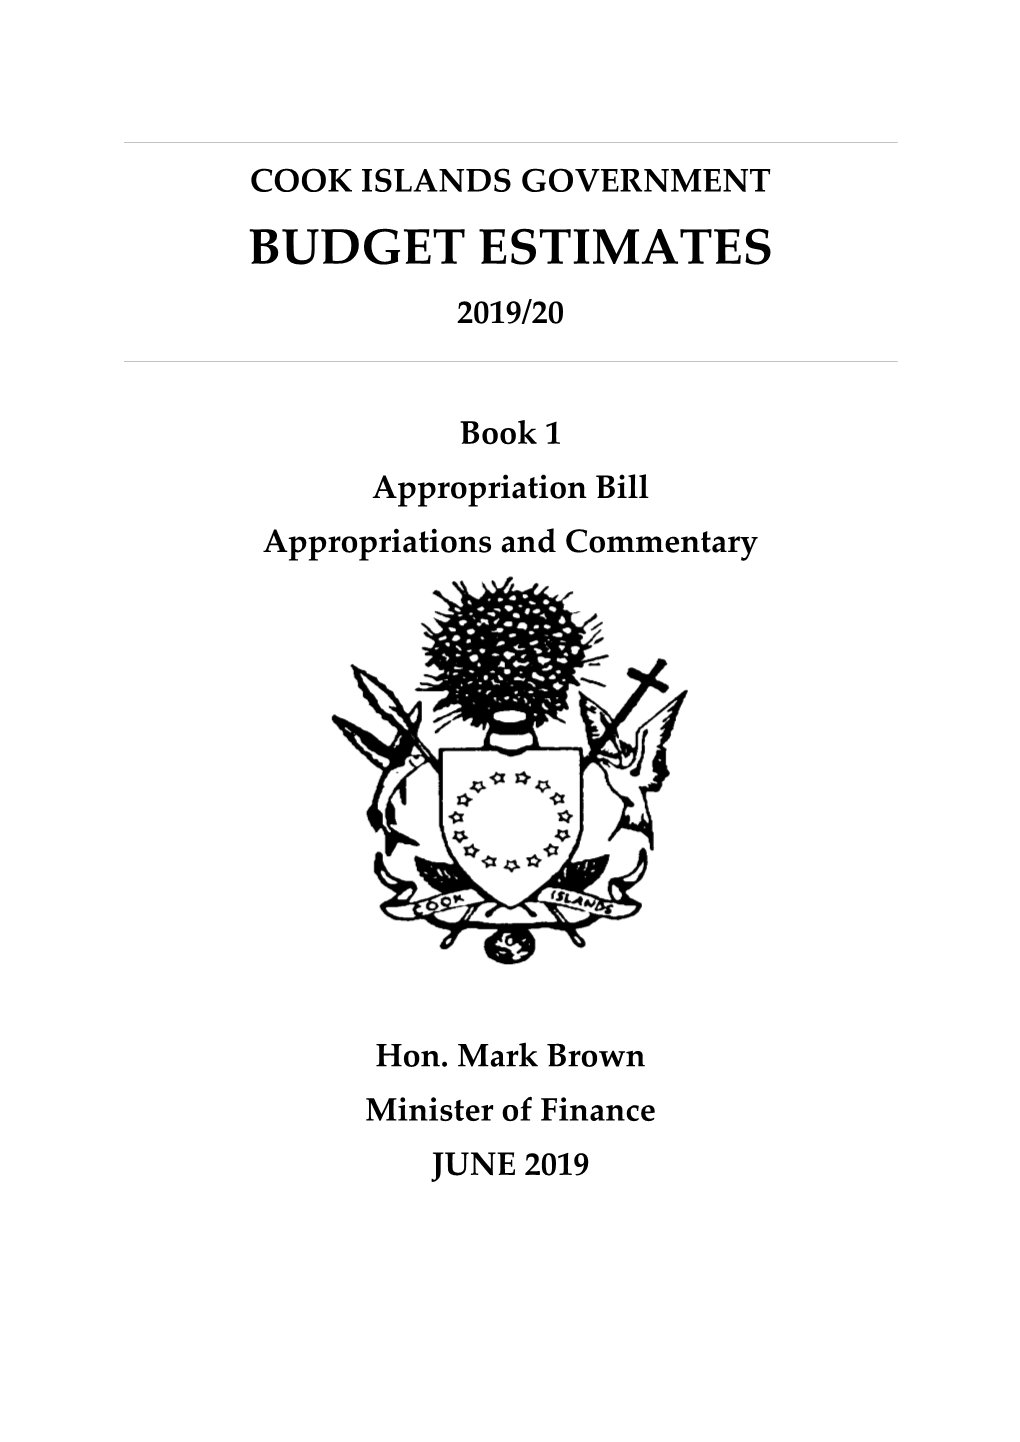 Cook Islands Government Budget Estimates 2019/20